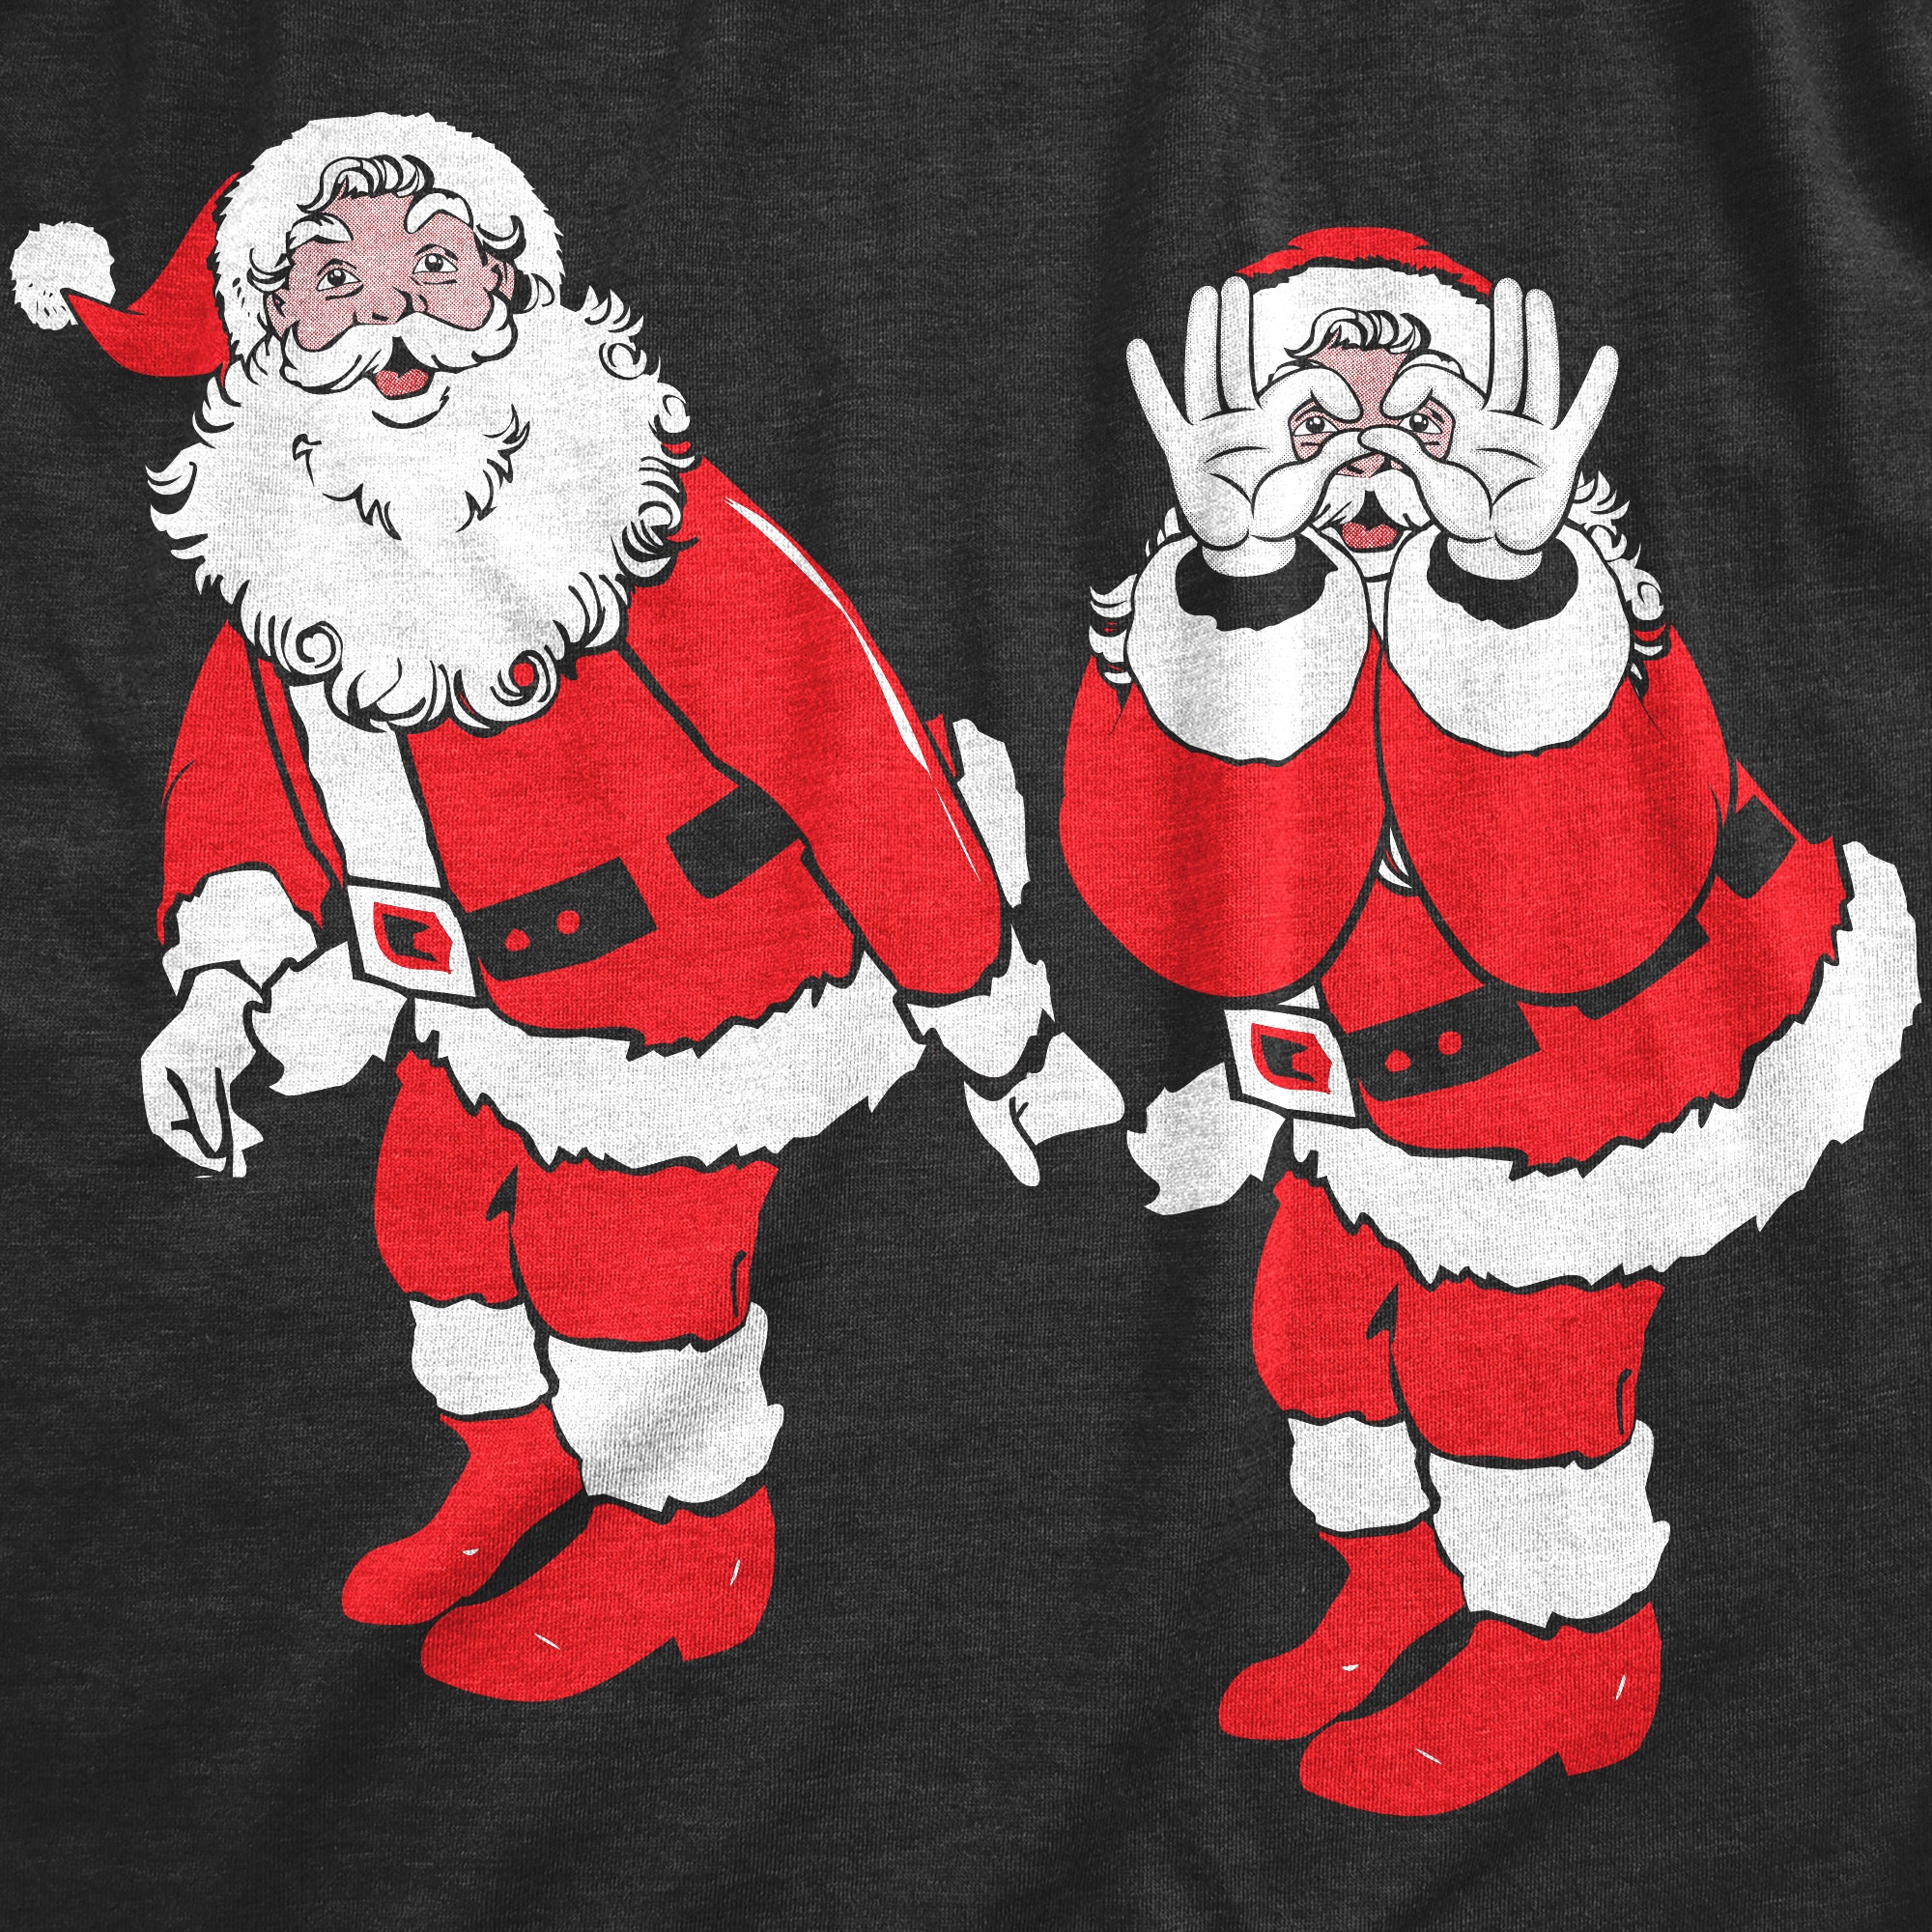 Funny Heather Black - Griddy Griddy Dance Santa Mens T Shirt Nerdy Christmas Internet sarcastic Tee